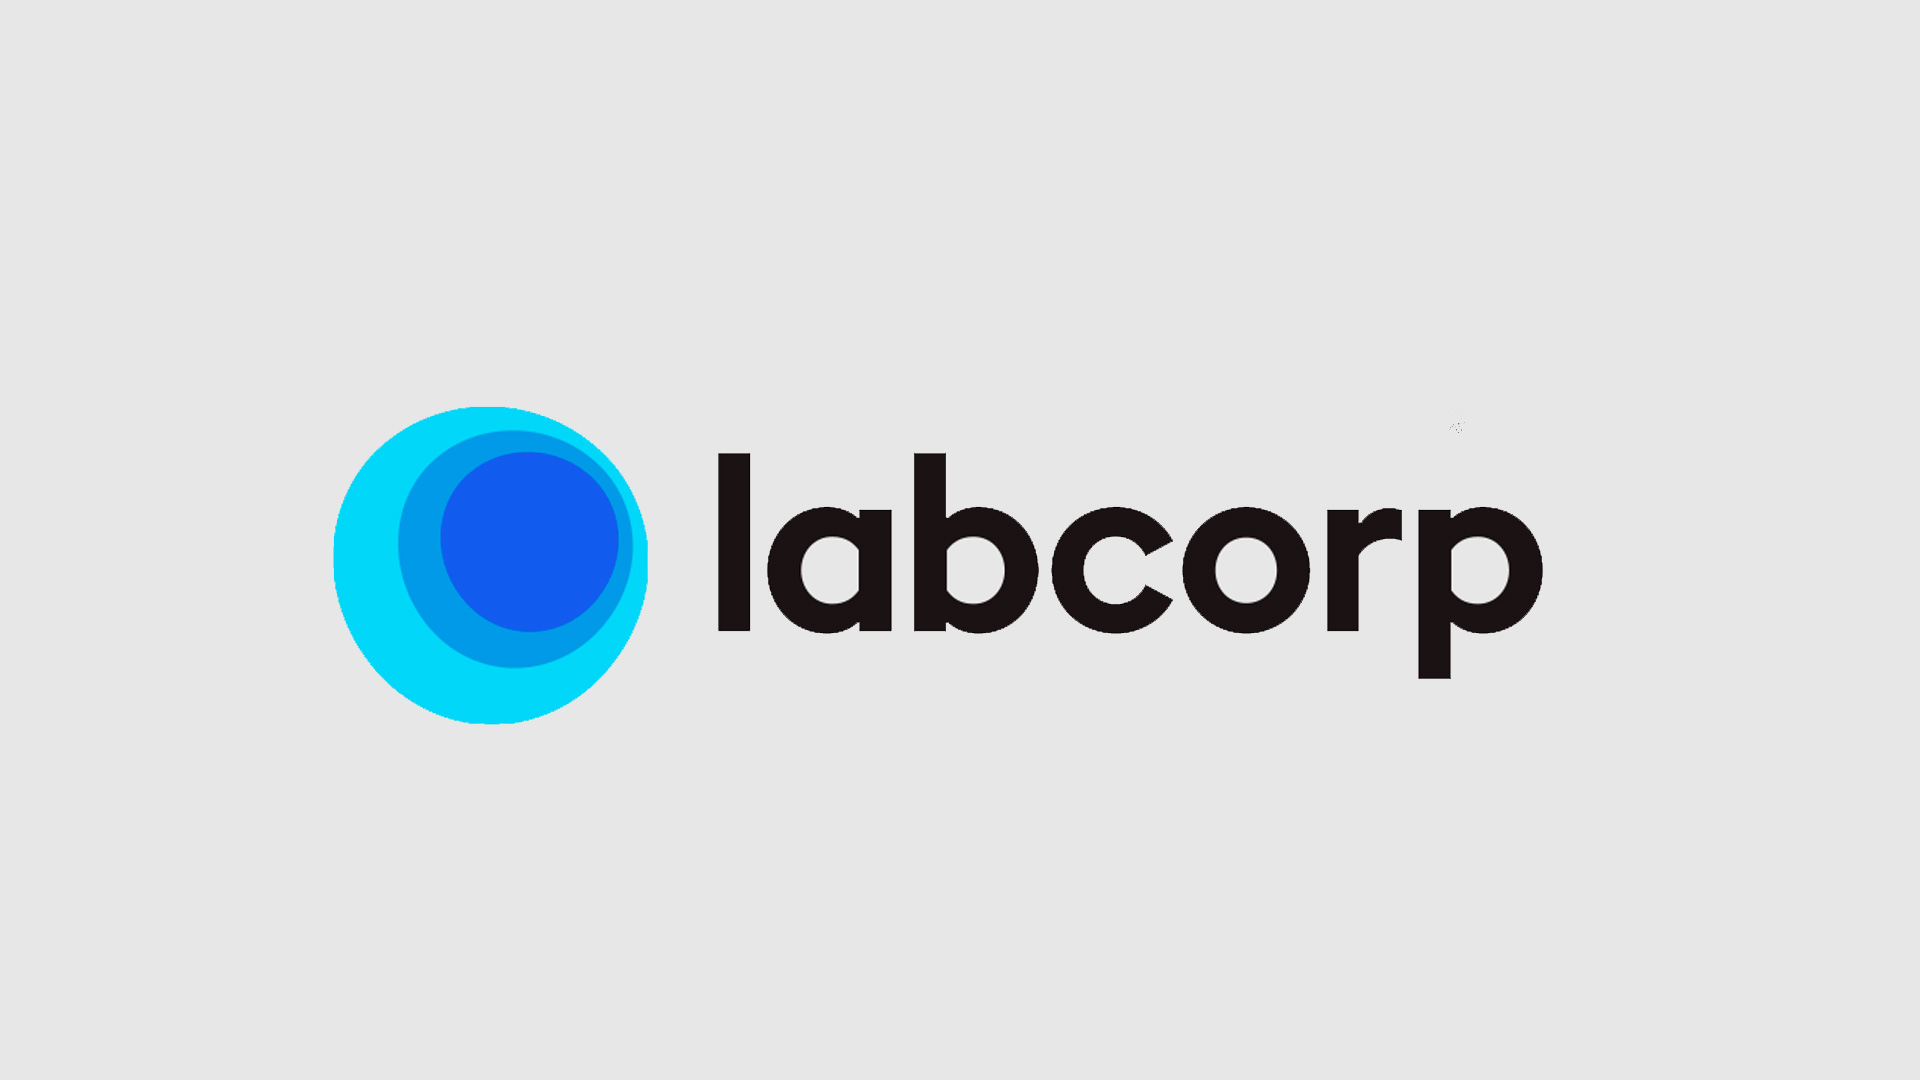 mejores-logos-farmaceutico-labcorp-24